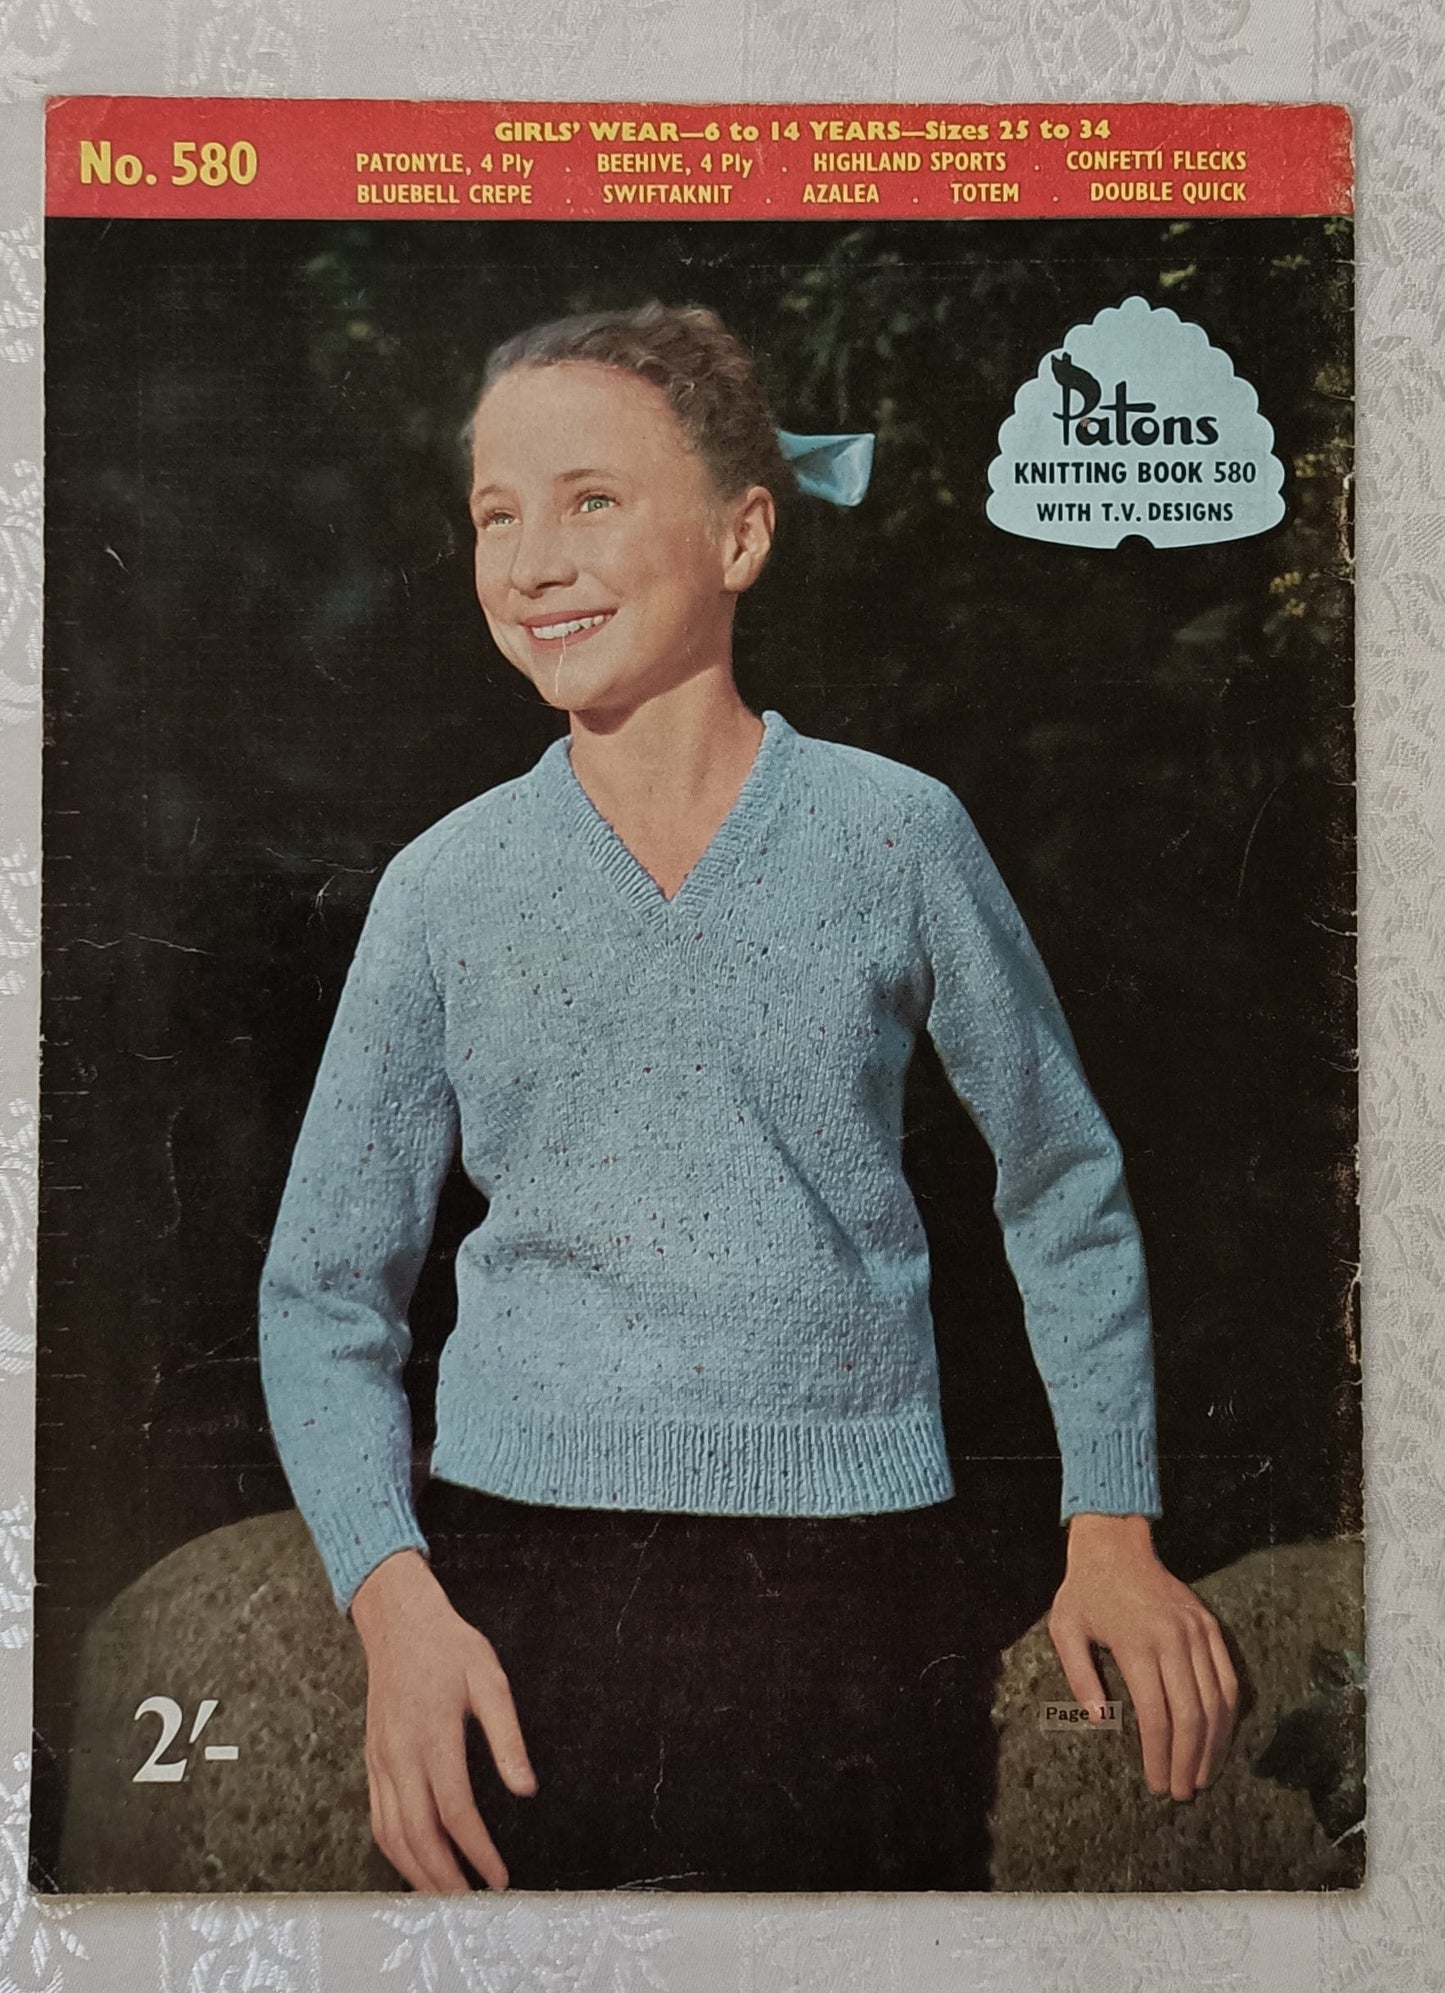 Patons knitting book 580 knitting patterns for girls 6 - 14